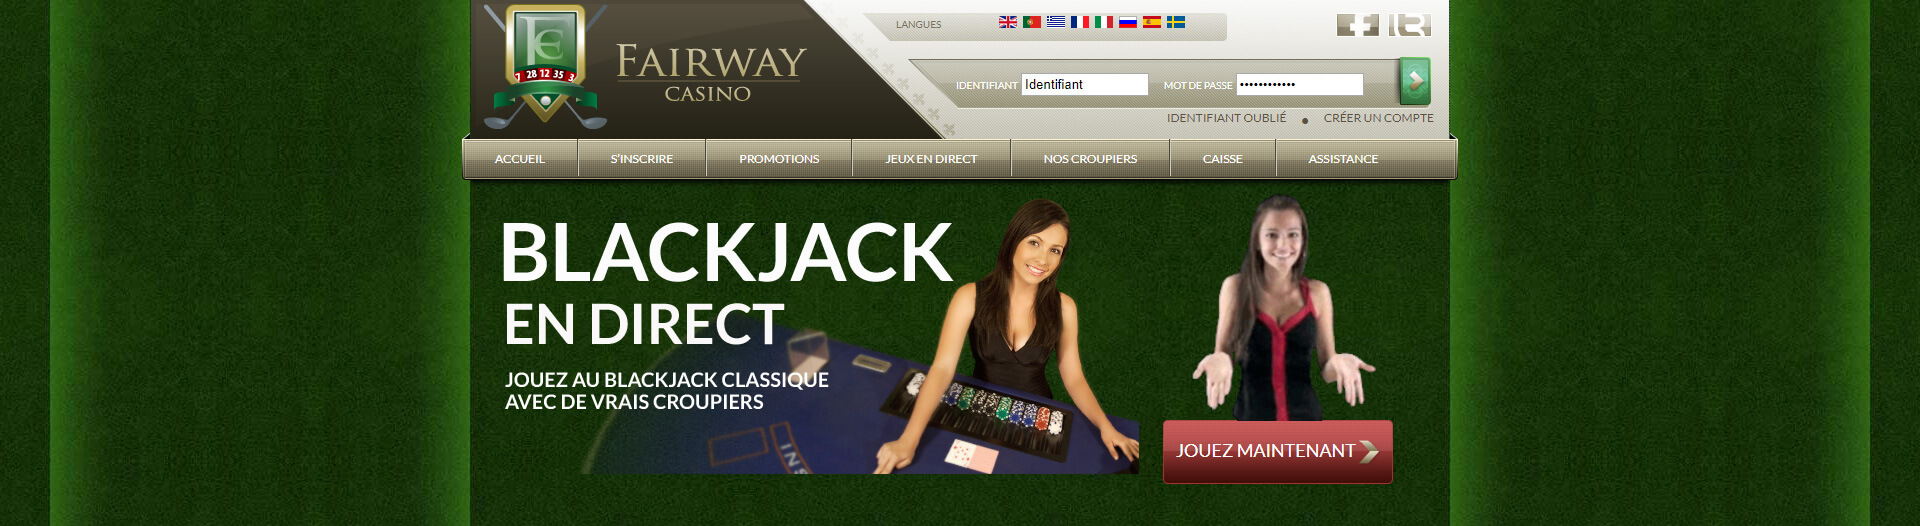 Fairway Casino France